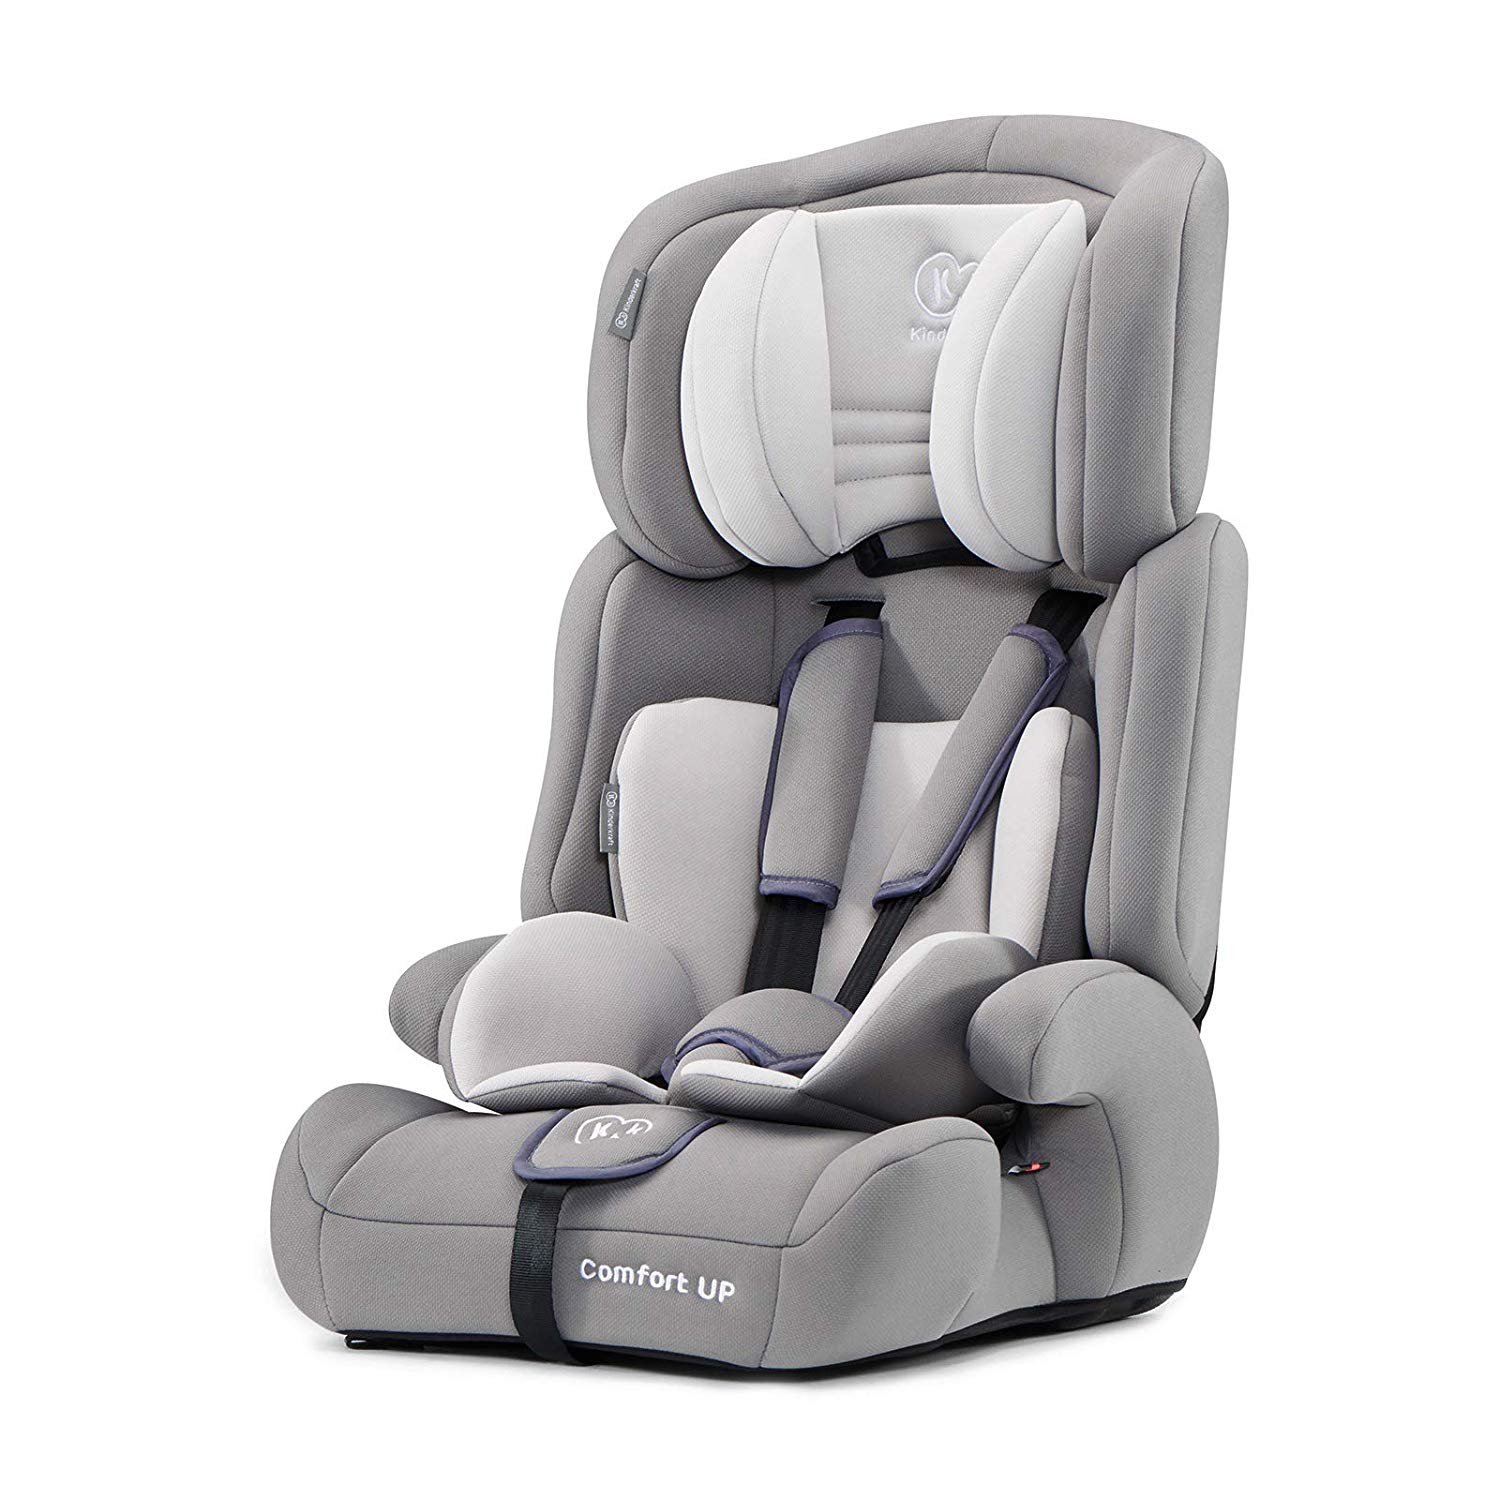 Kinderkraft Comfort Up Child’S Car Seat - For Children Weighing 9 - 36 Kg, 